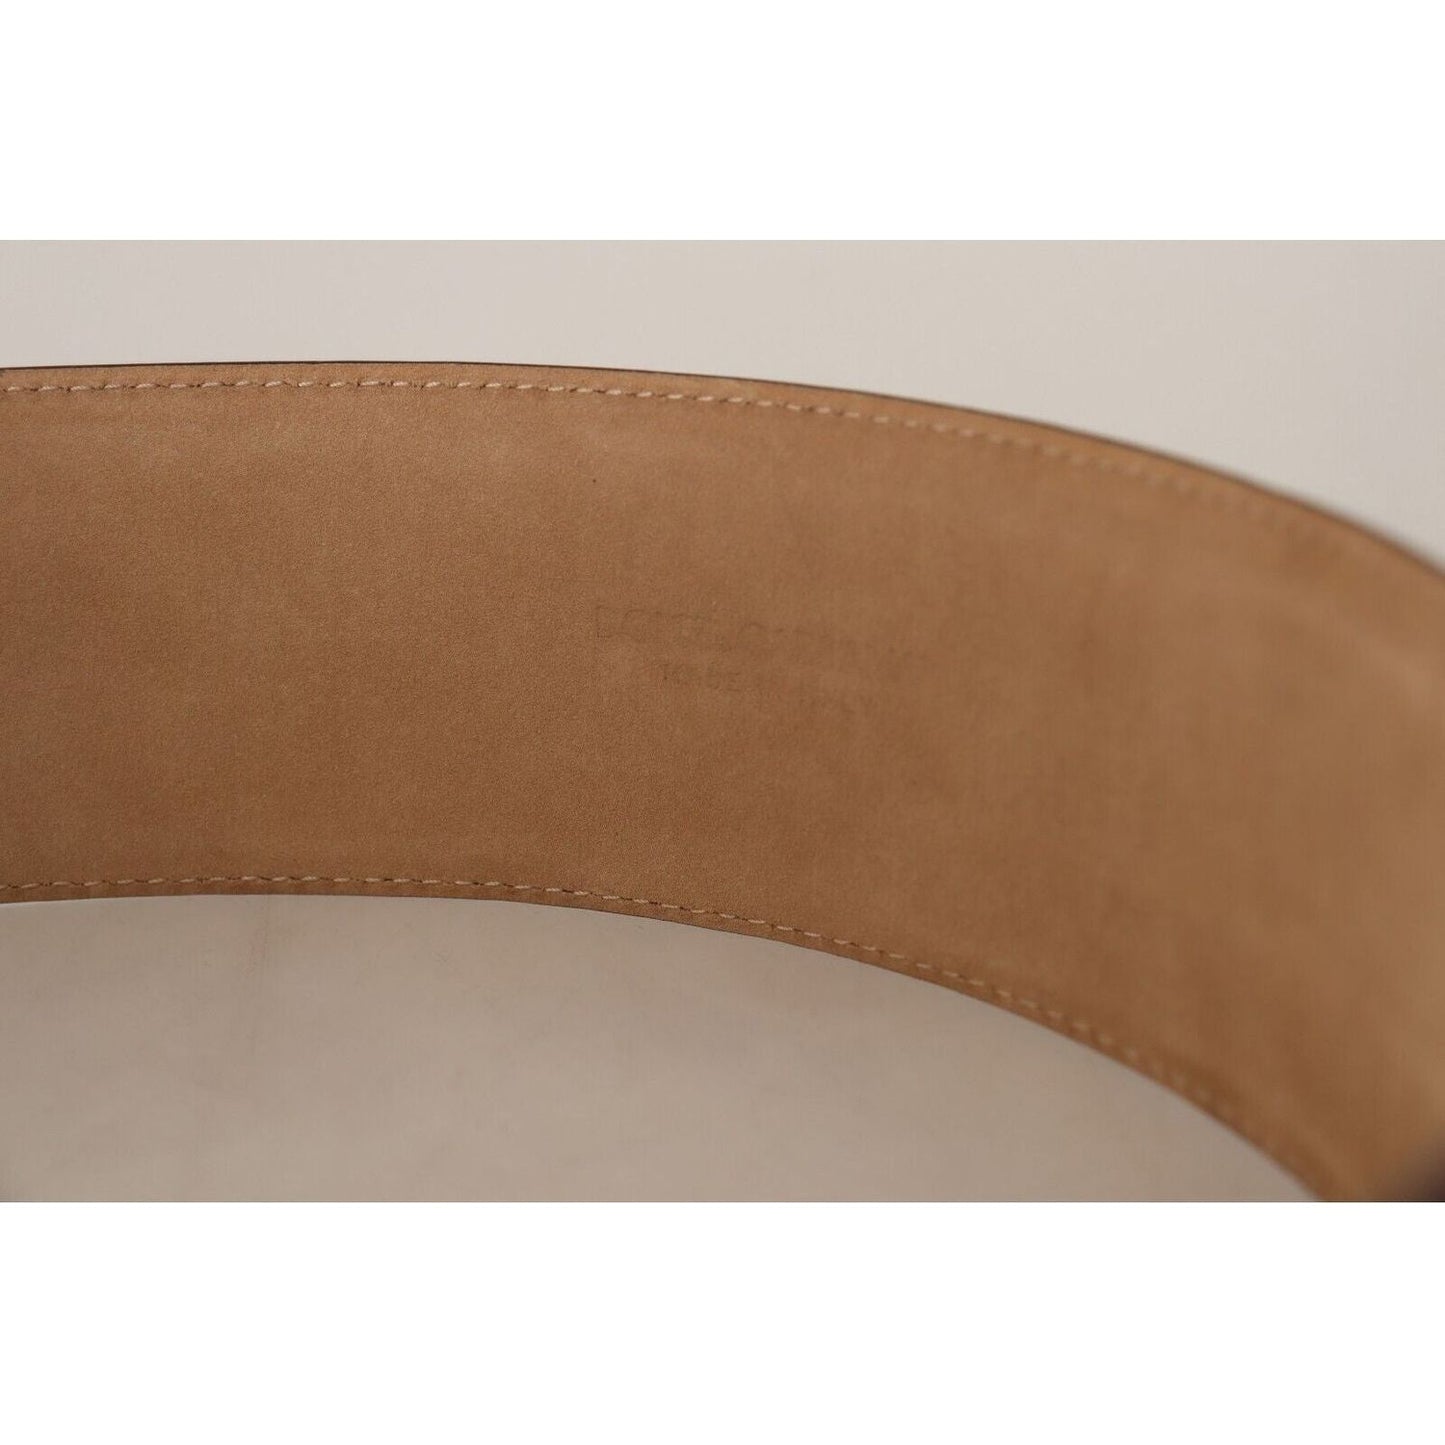 Dolce & Gabbana Elegant Brown Leather Belt with Gold Oval Buckle dark-brown-leather-gold-metal-buckle-belt